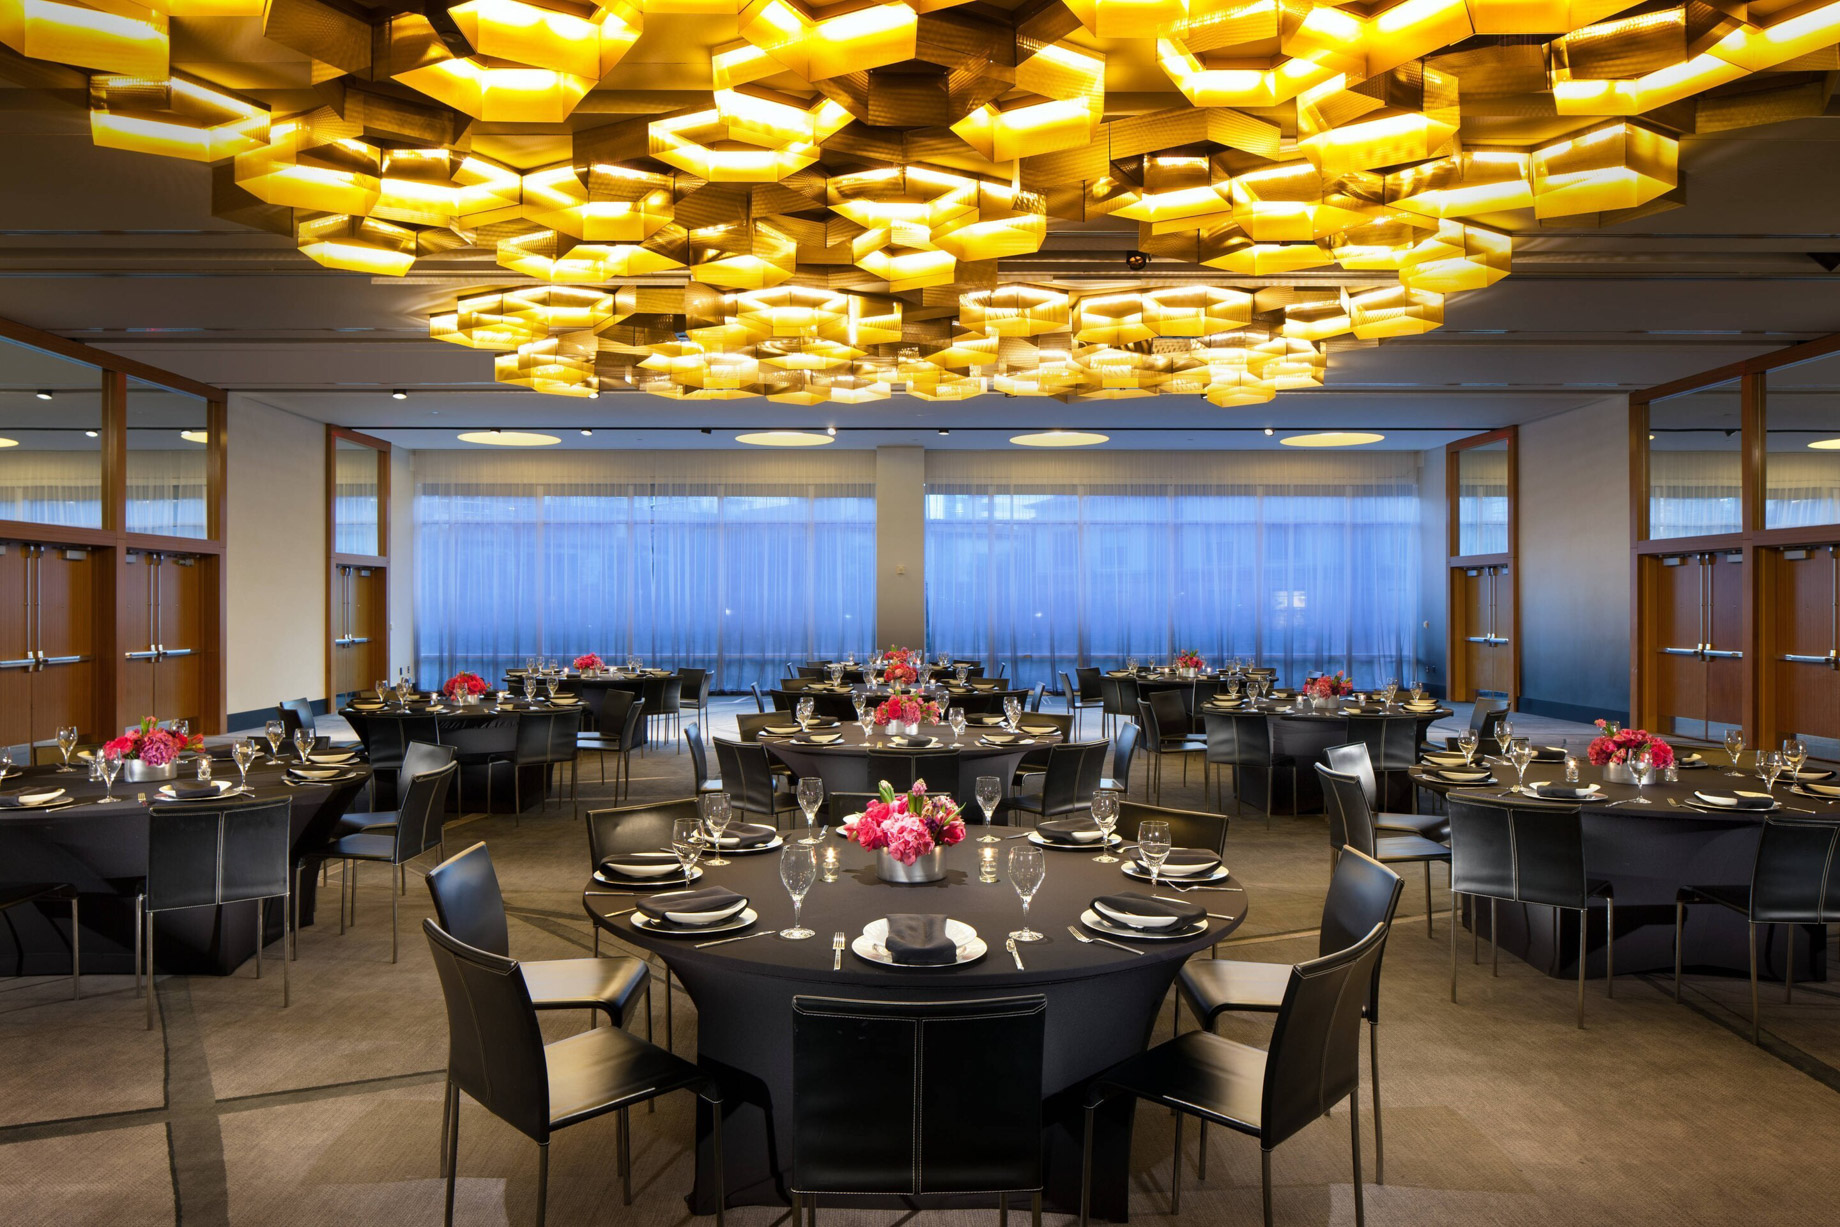 W Dallas Victory Hotel – Dallas, TX, USA – The Great Room Banquet Setup